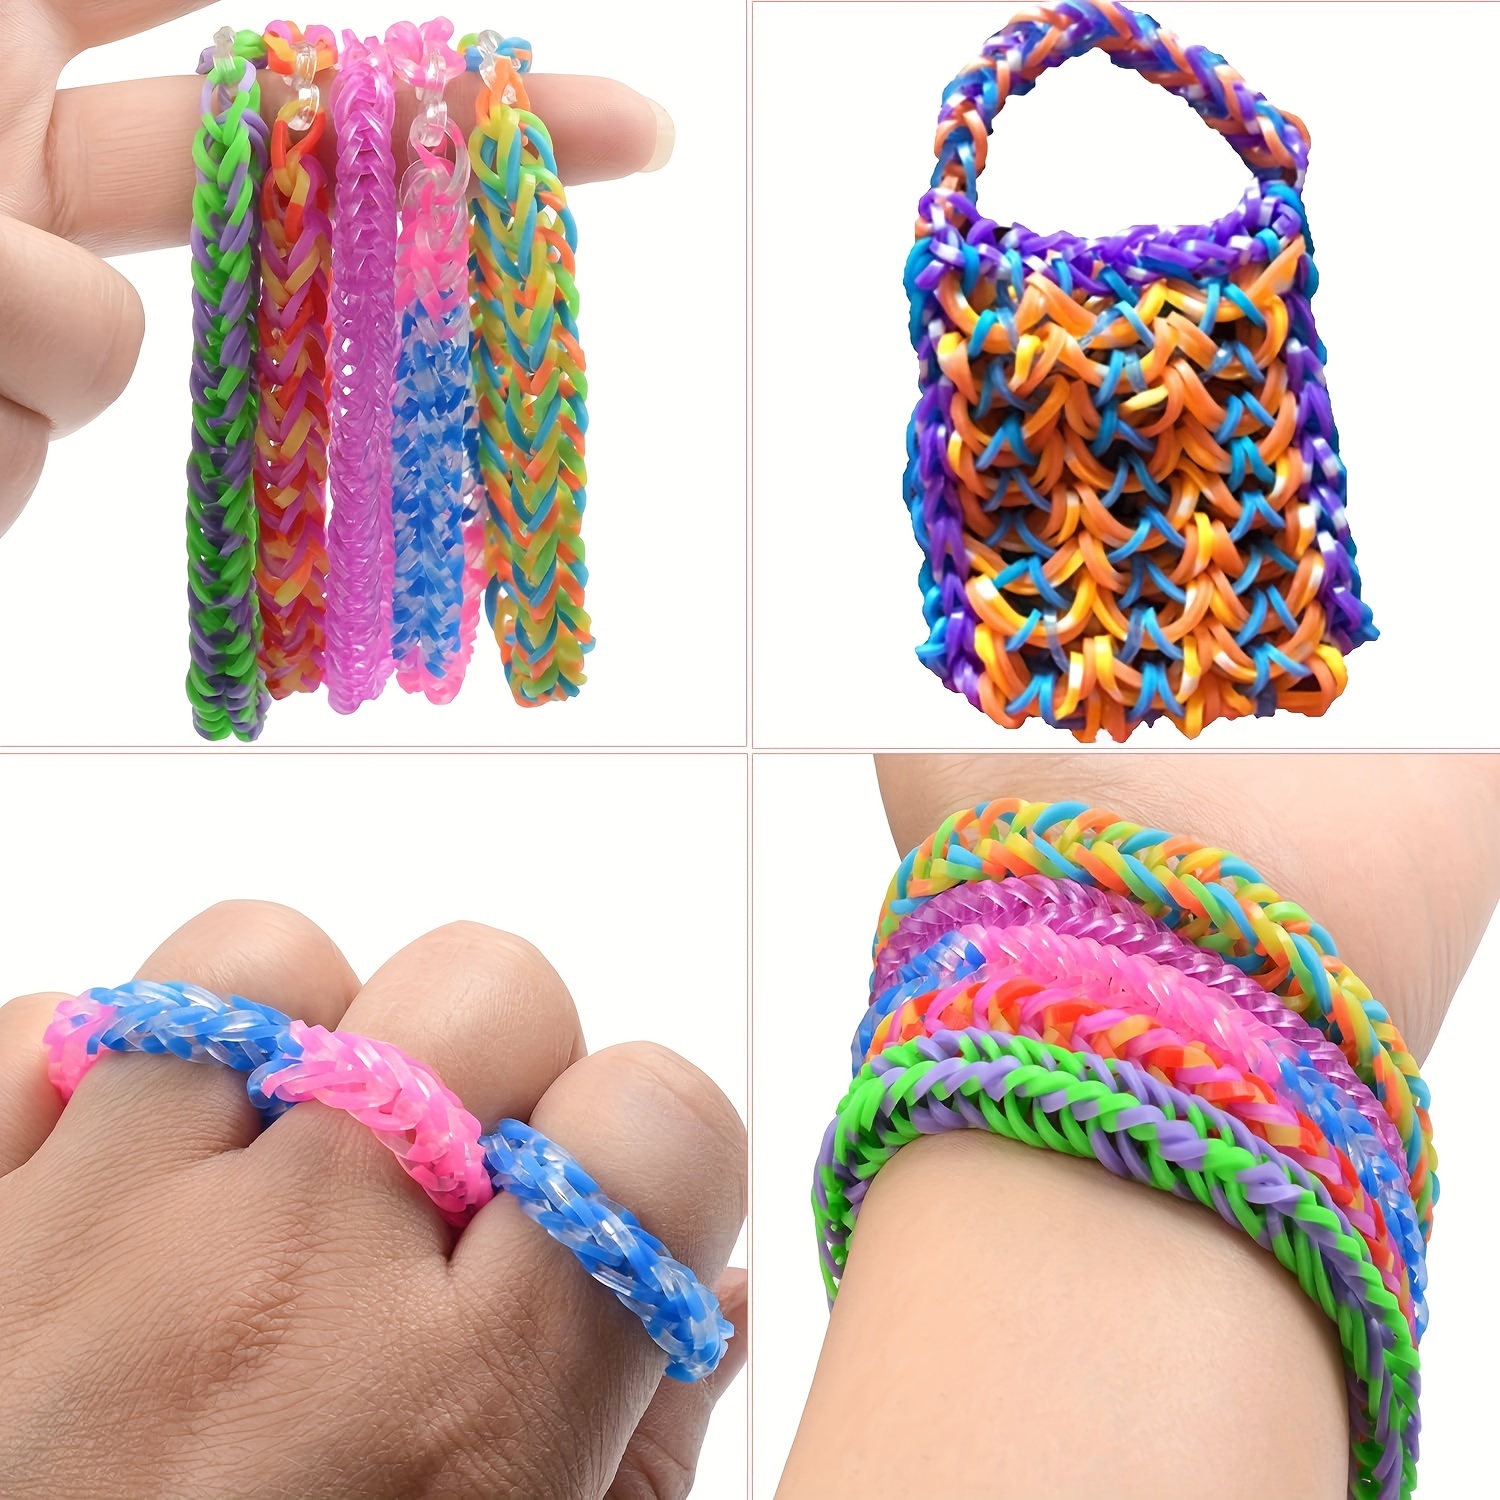 1500+ Loom Bands Handcraft Kit | Rubber Bands For Bracelet Making Kit DIY  Art Craft Kit Girls &Boys Creativity Gift | Ideal Birthday Gifts